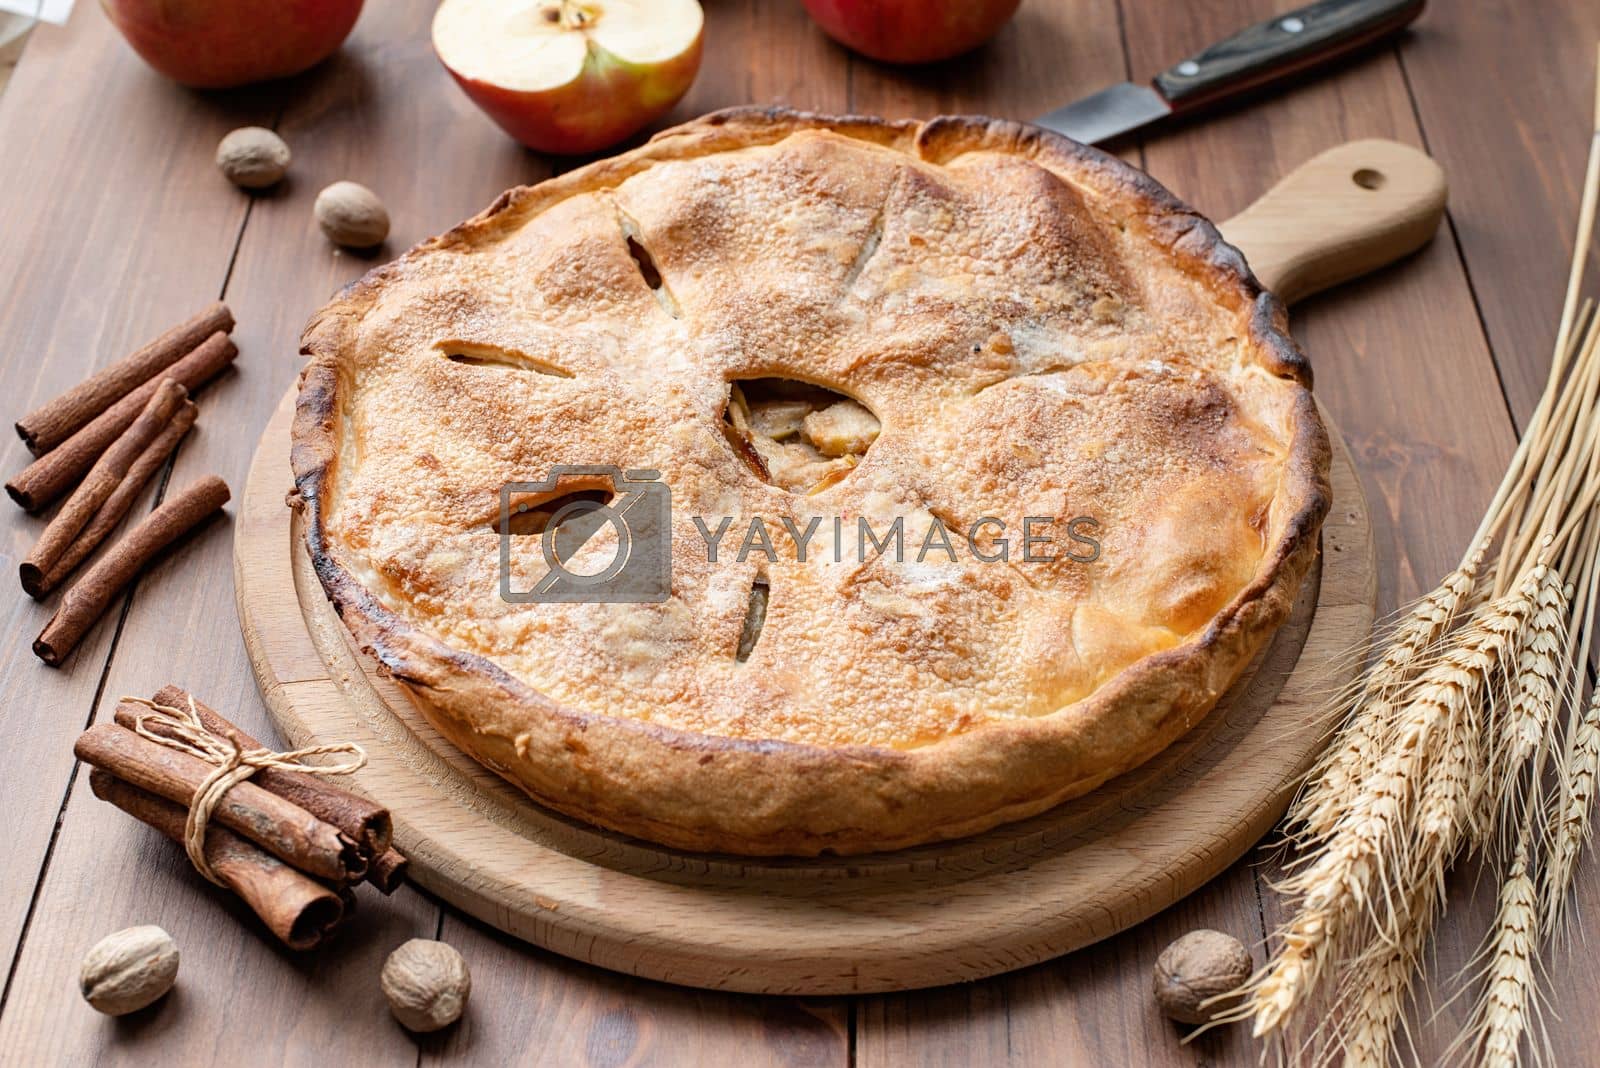 Royalty free image of apple pie served with sugar powder by Desperada